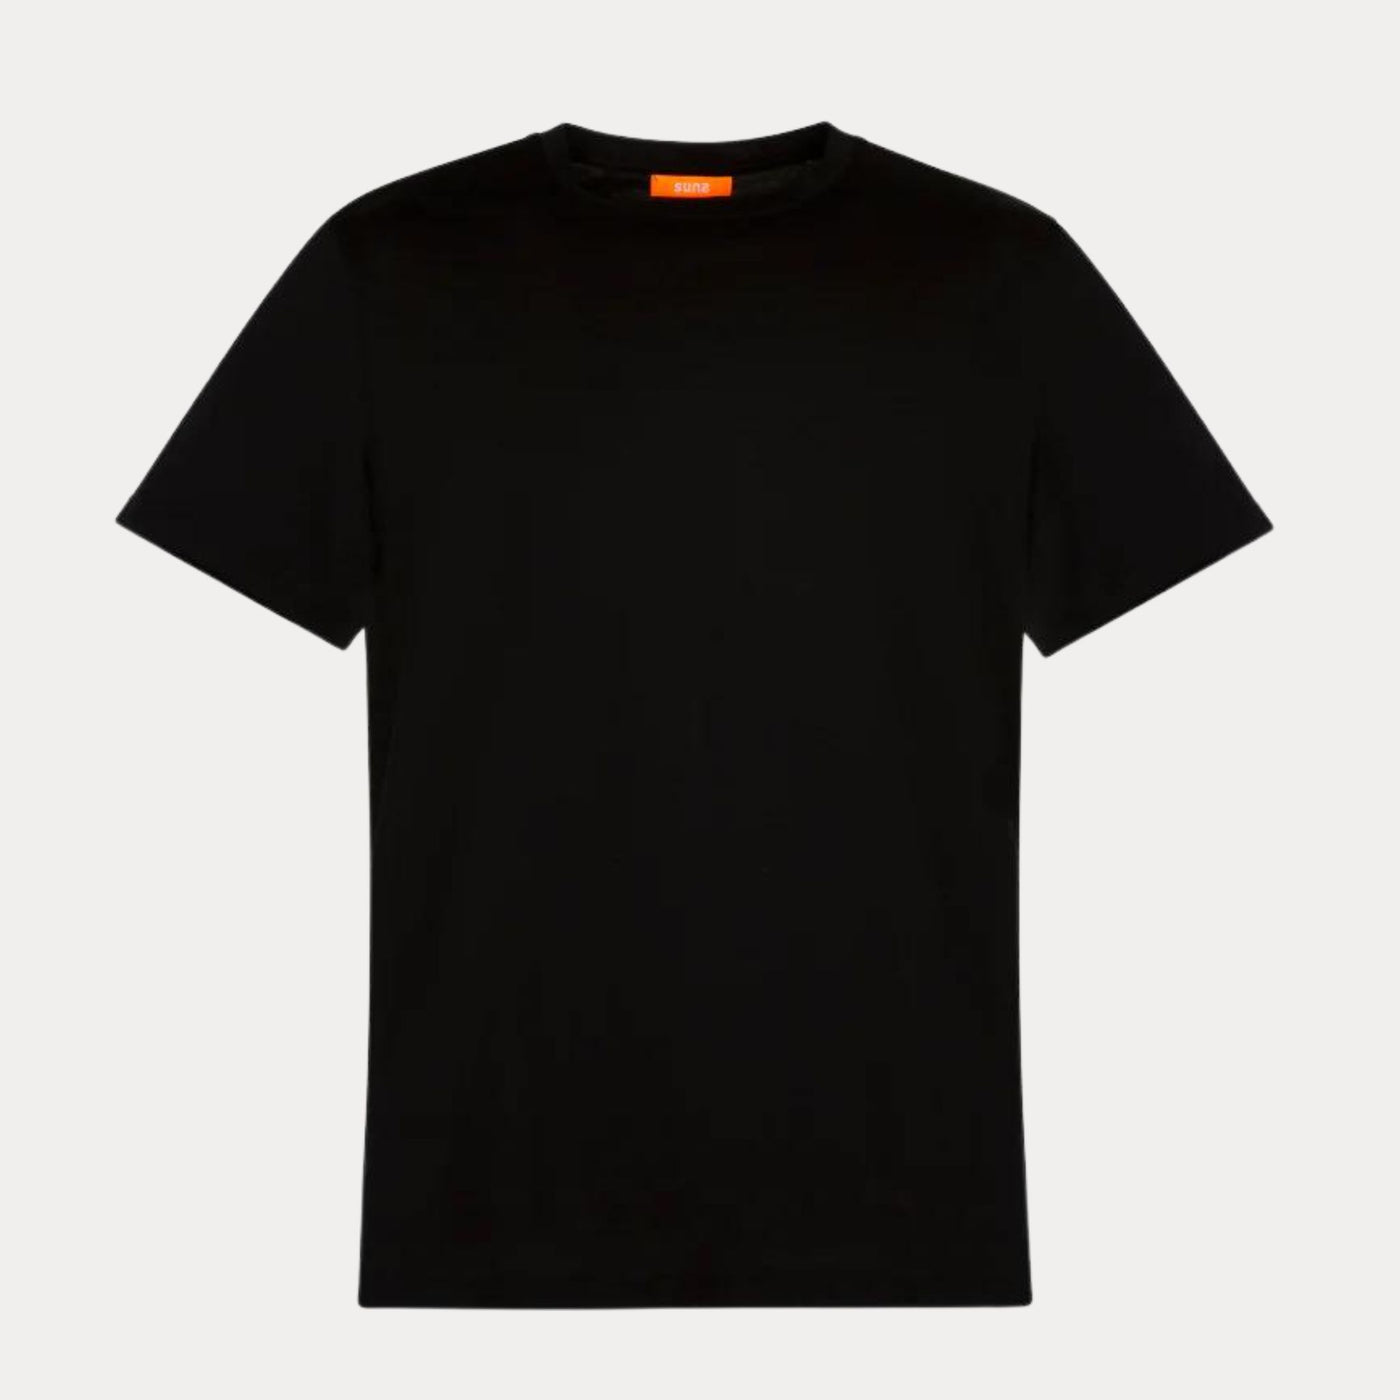 T-shirt da uomo nera firmata Sunstripes vista frontale